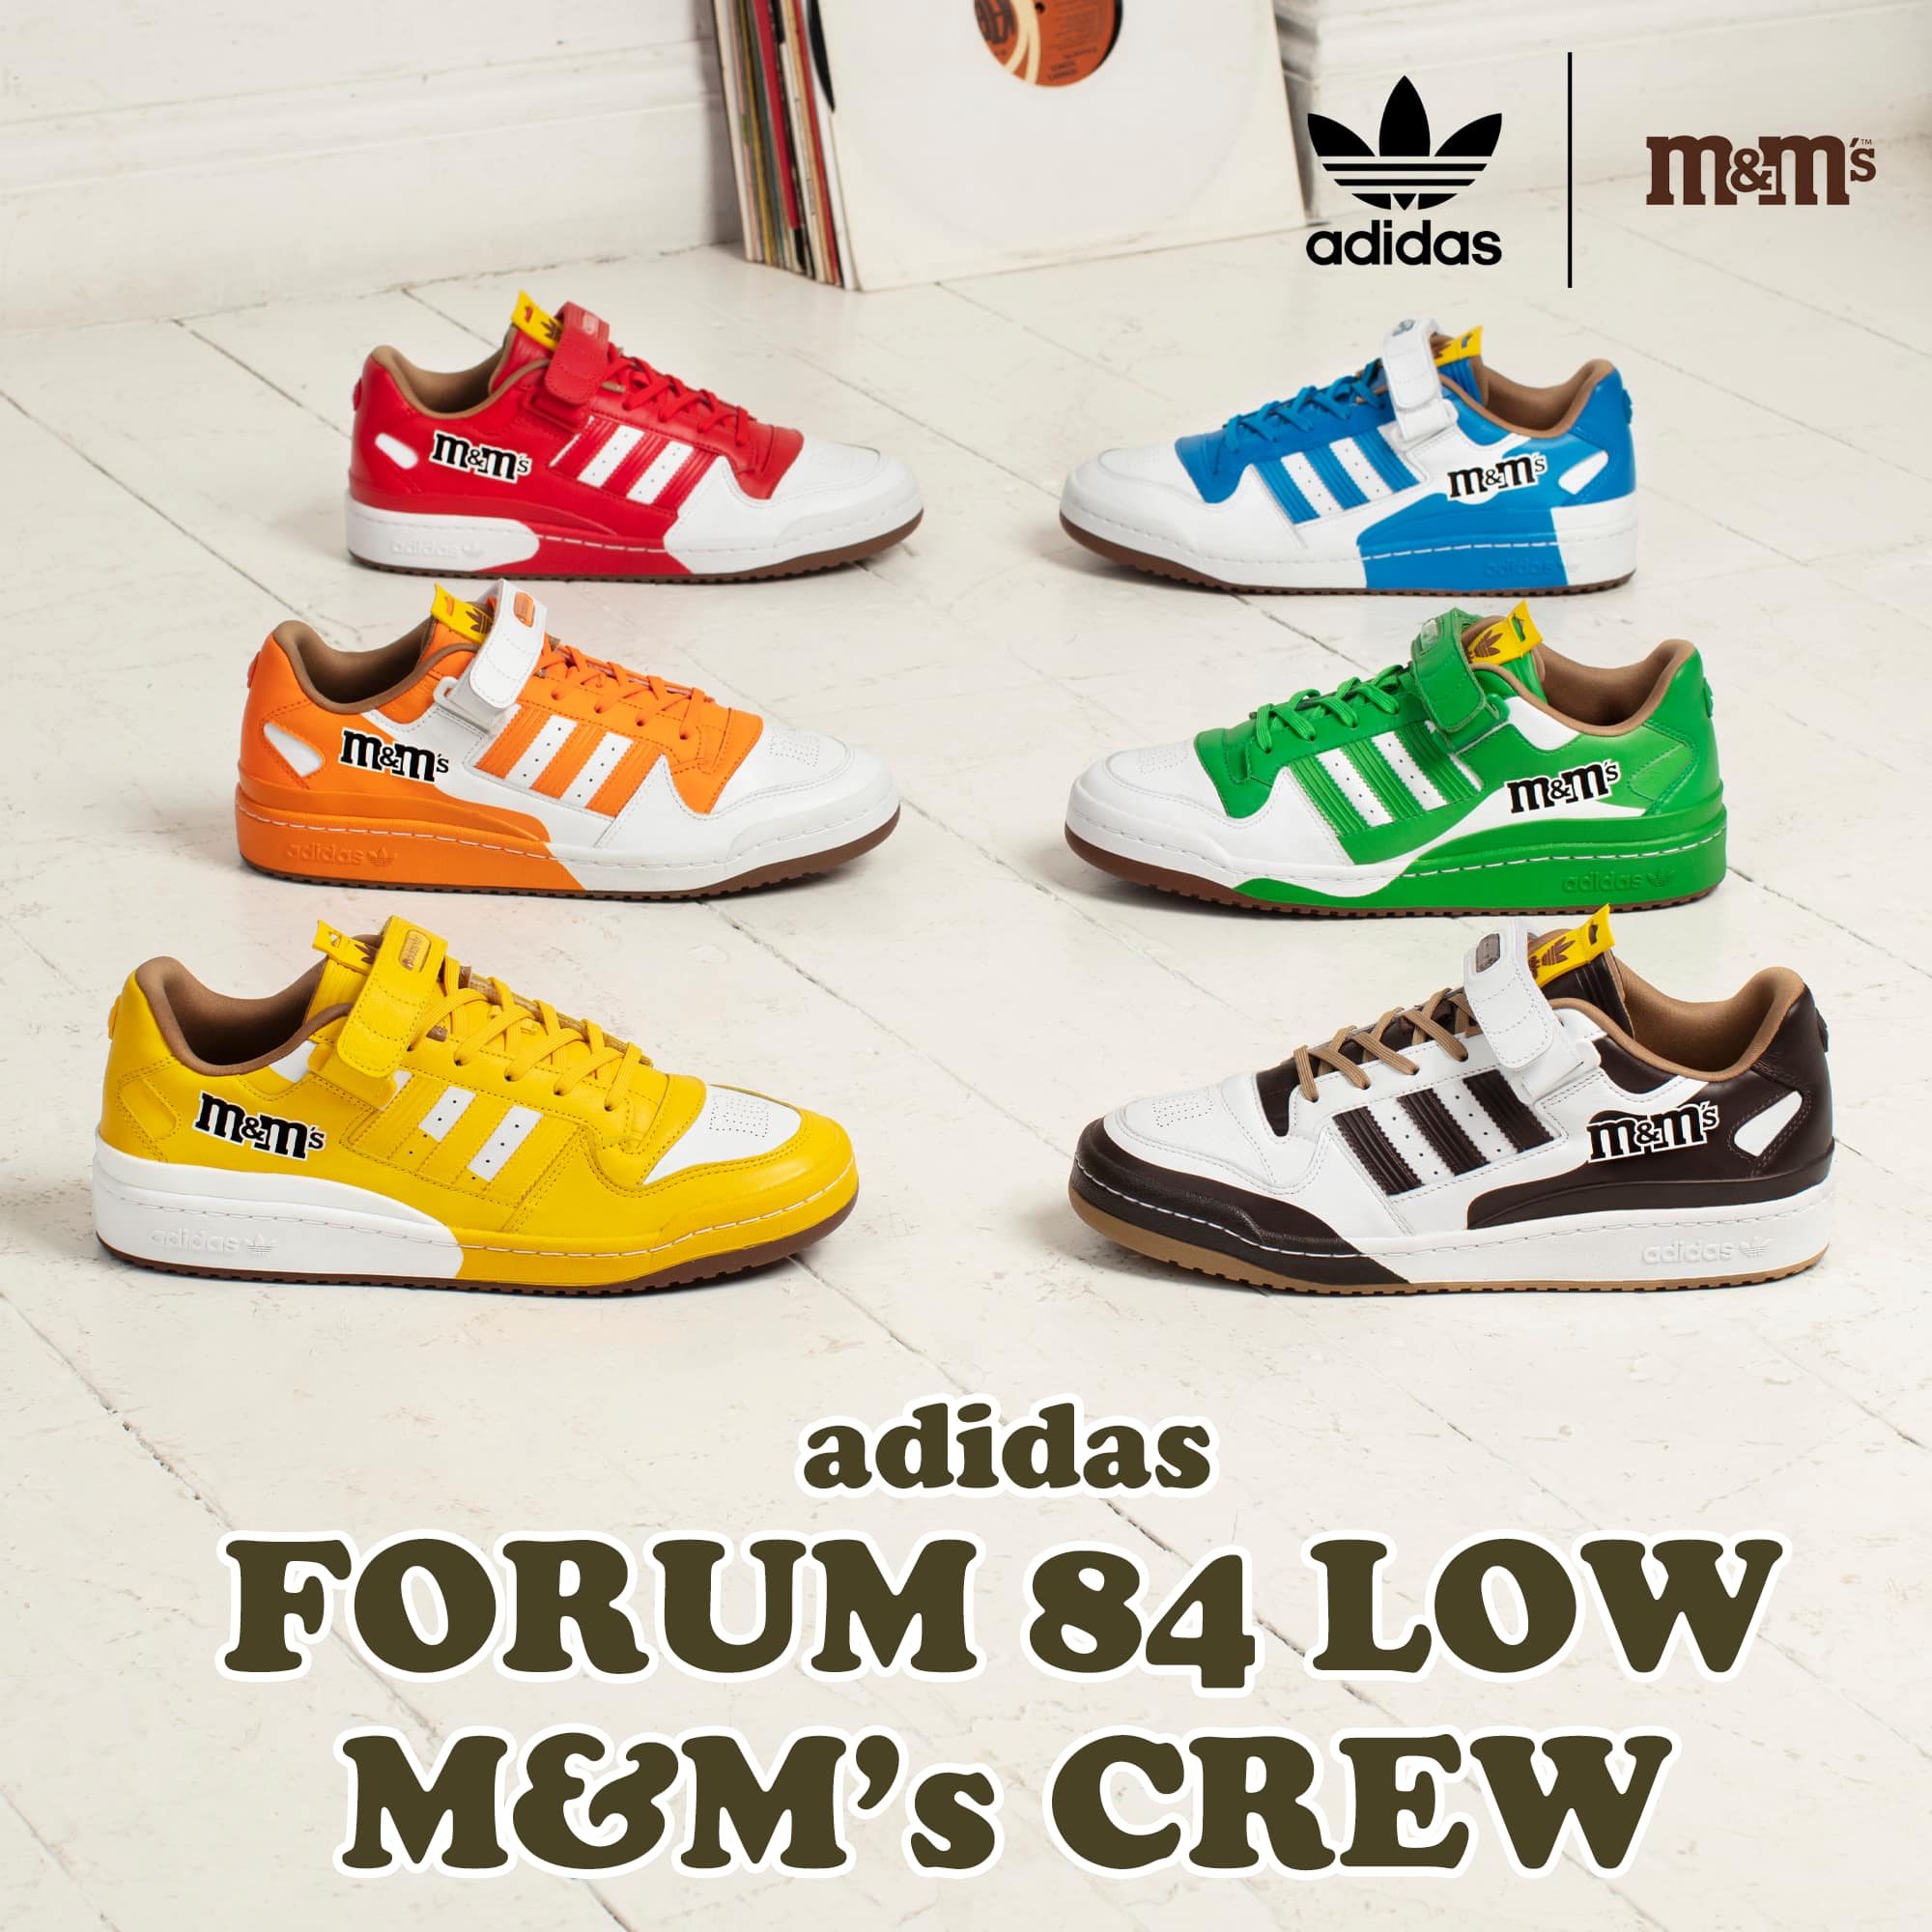 m&m's × adidas Forum Low